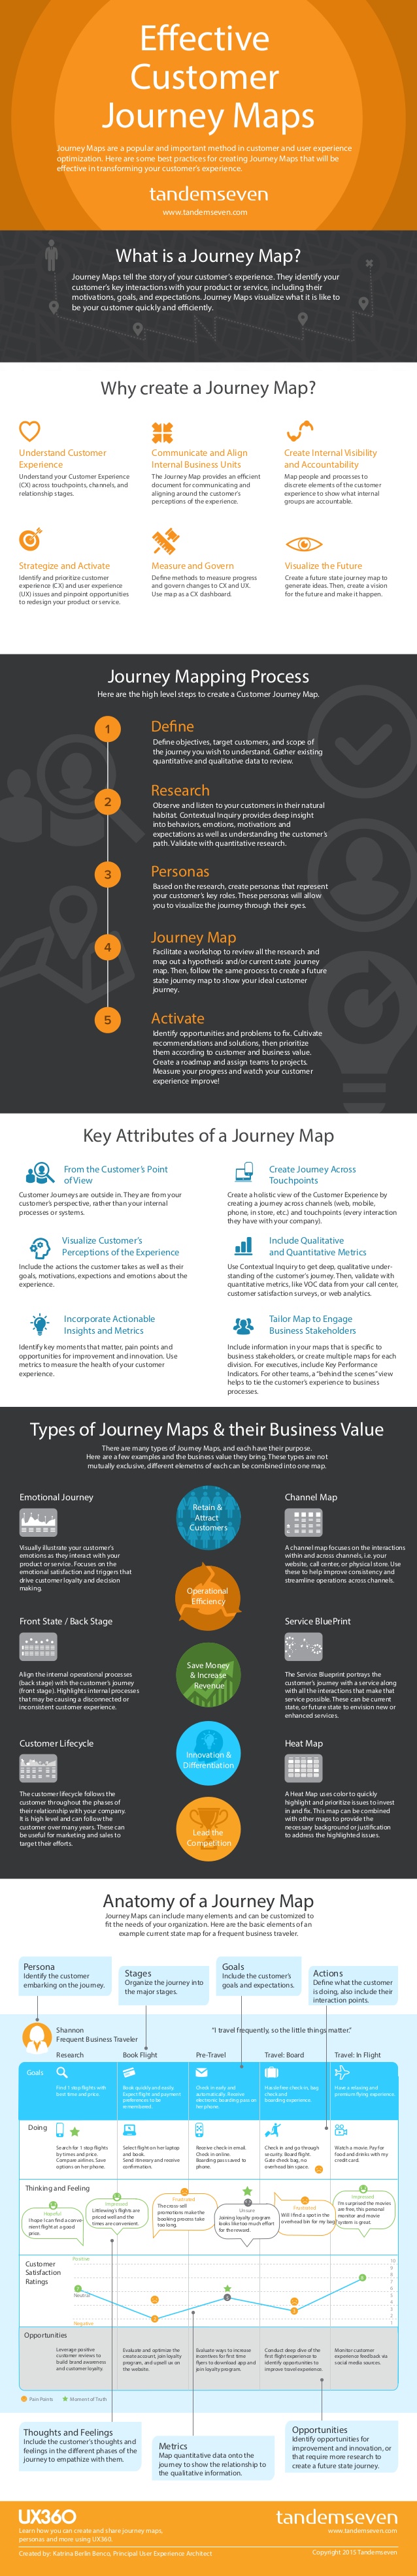 effective-customer-journey-maps-1-638